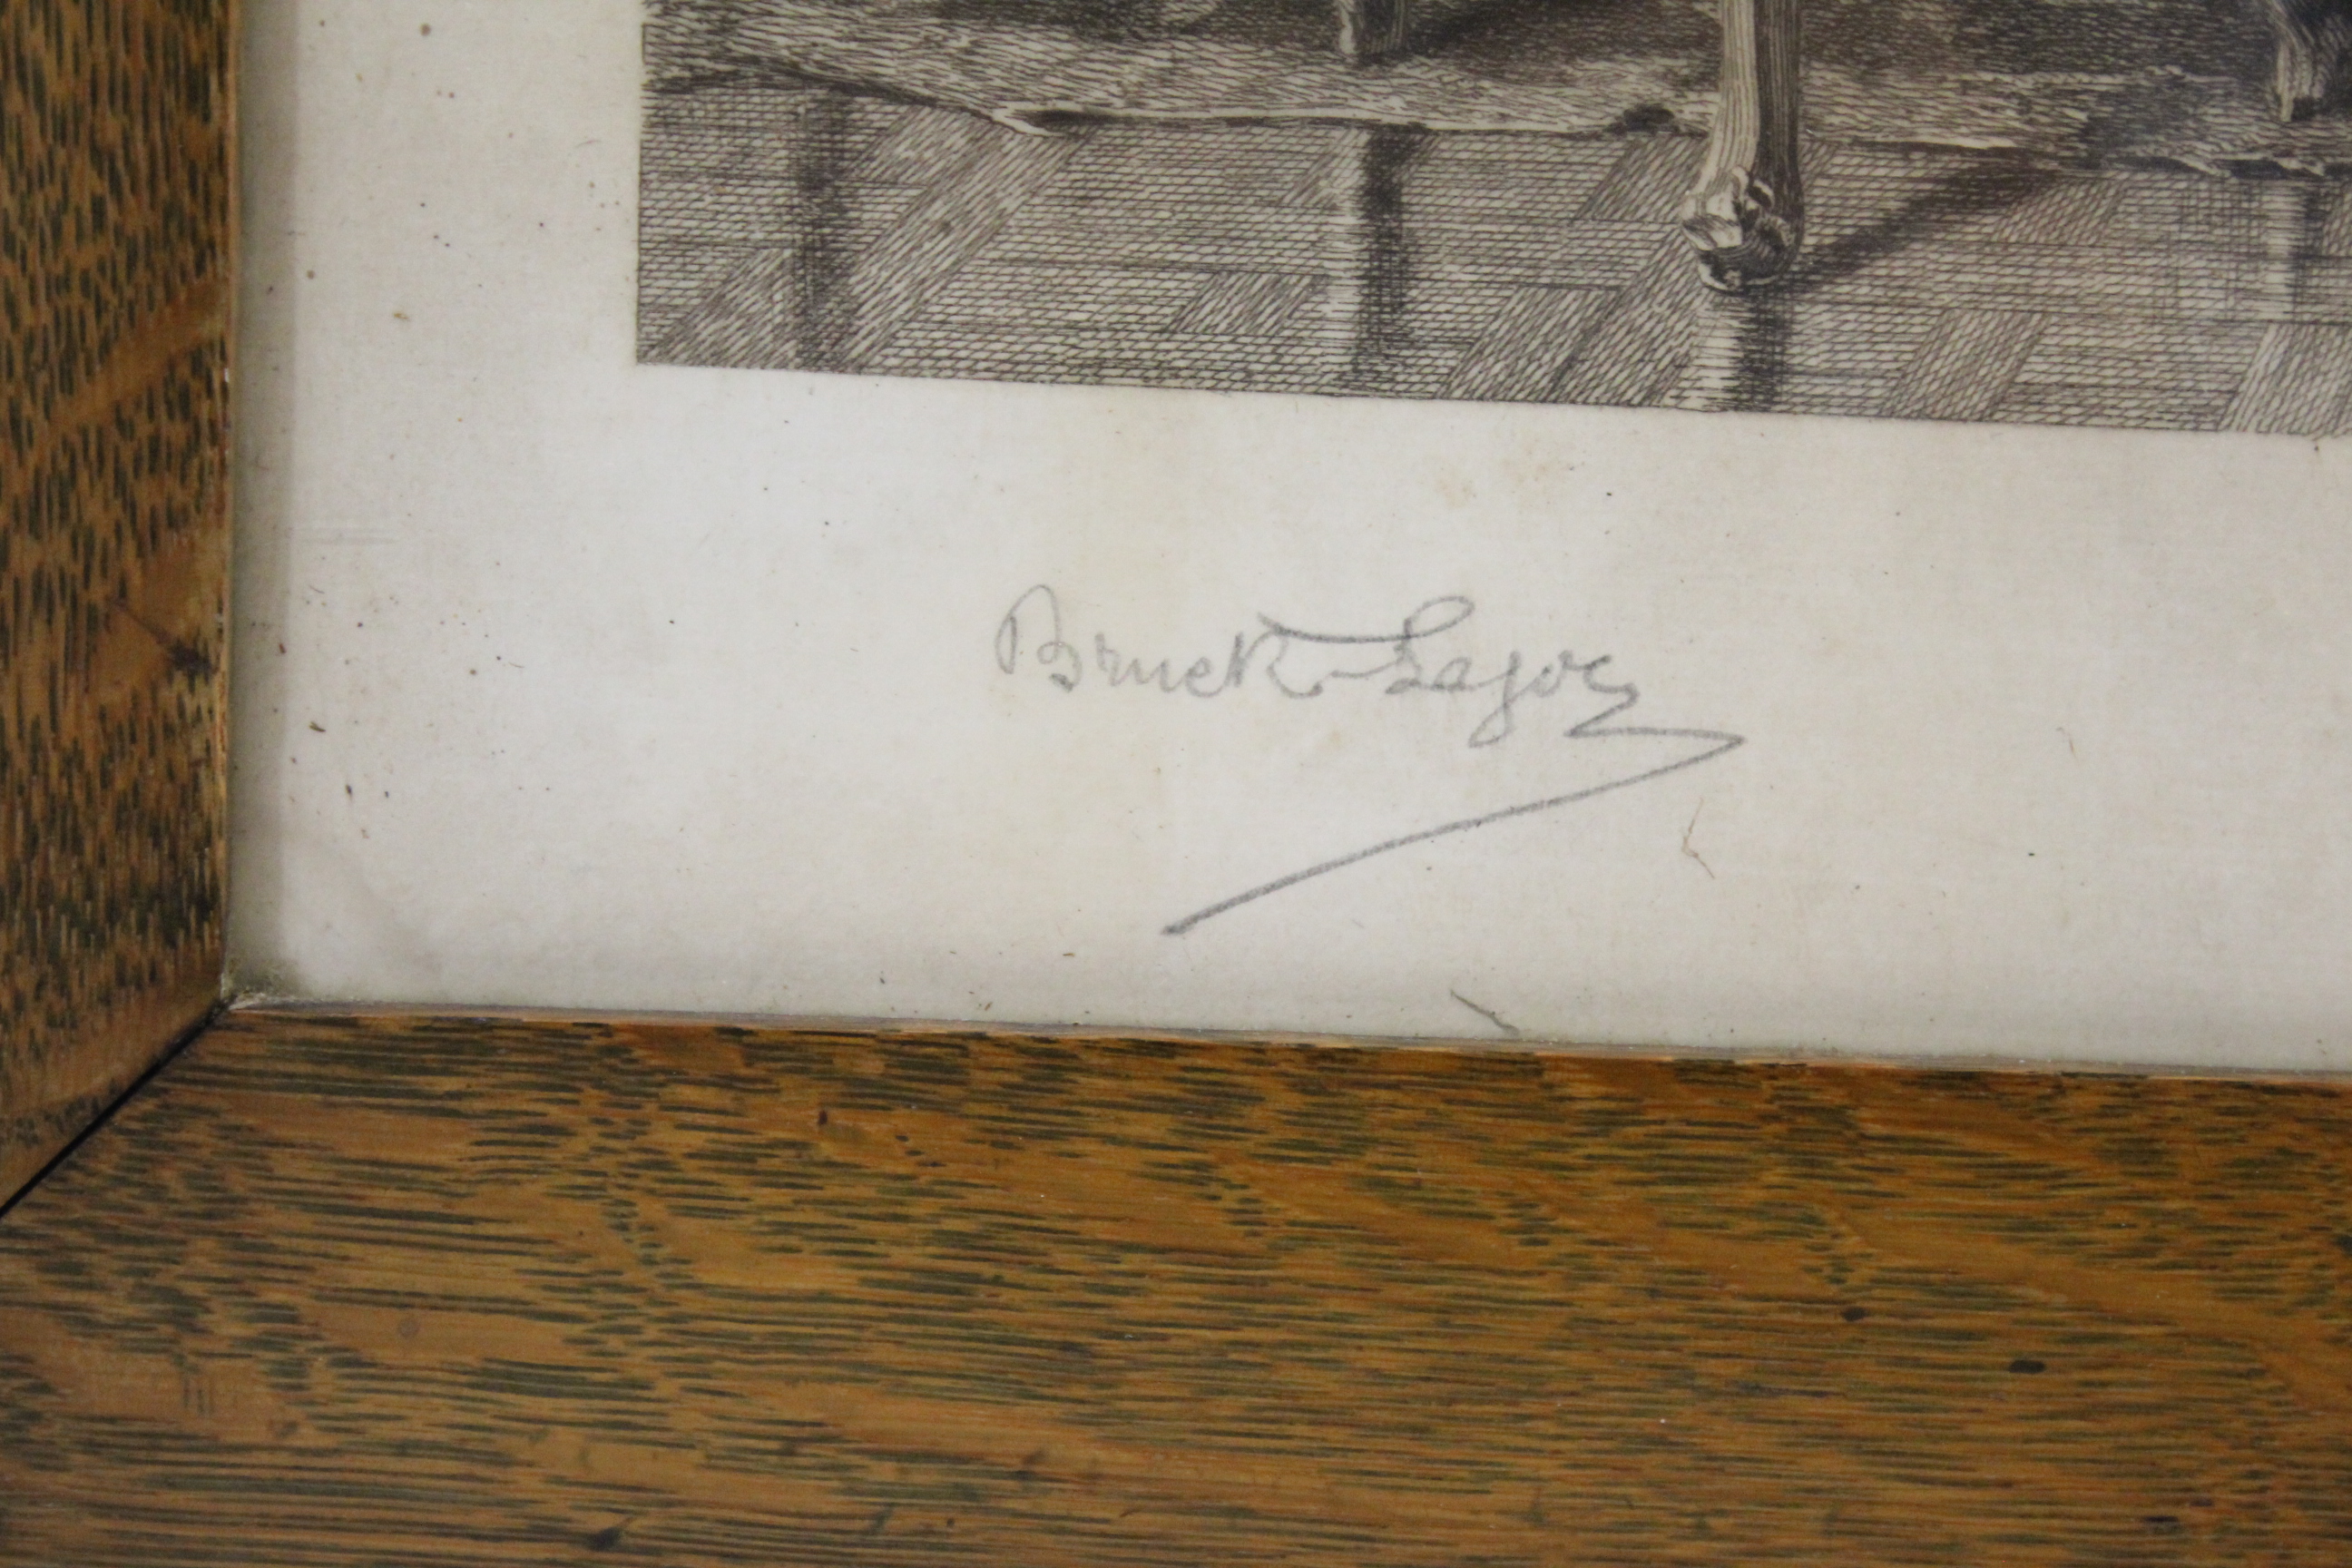 19THC FRAMED ENGRAVING - THE 'JOACHIM QUARTET' a 19thc framed engraving of 4 musicians, signed by - Image 3 of 4